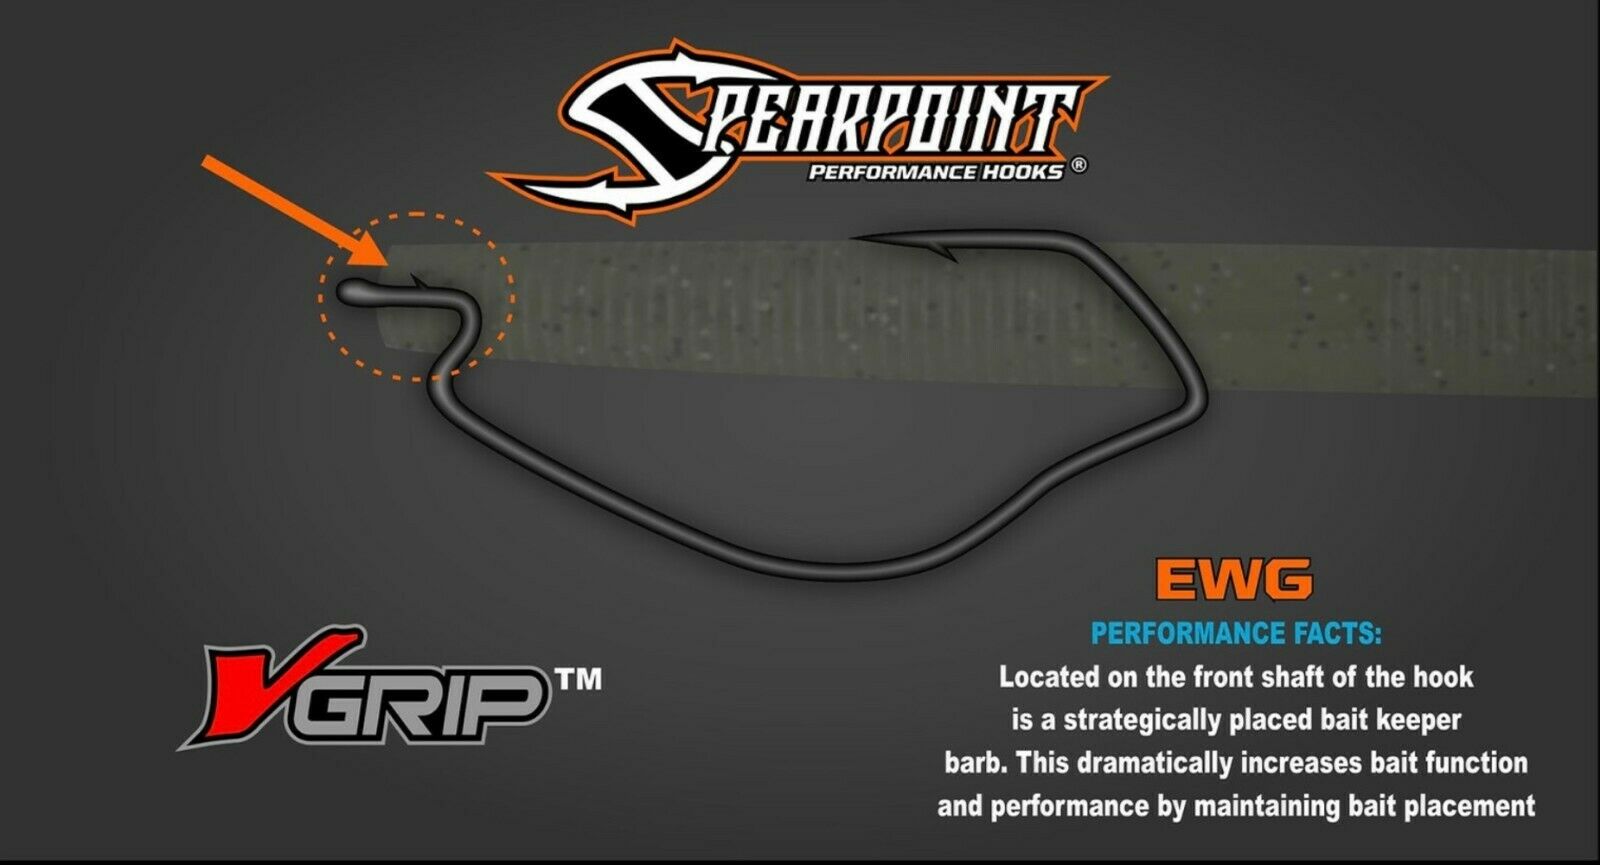 Spearpoint Performance Hooks GPfinesse Size #3 - 6 Pack